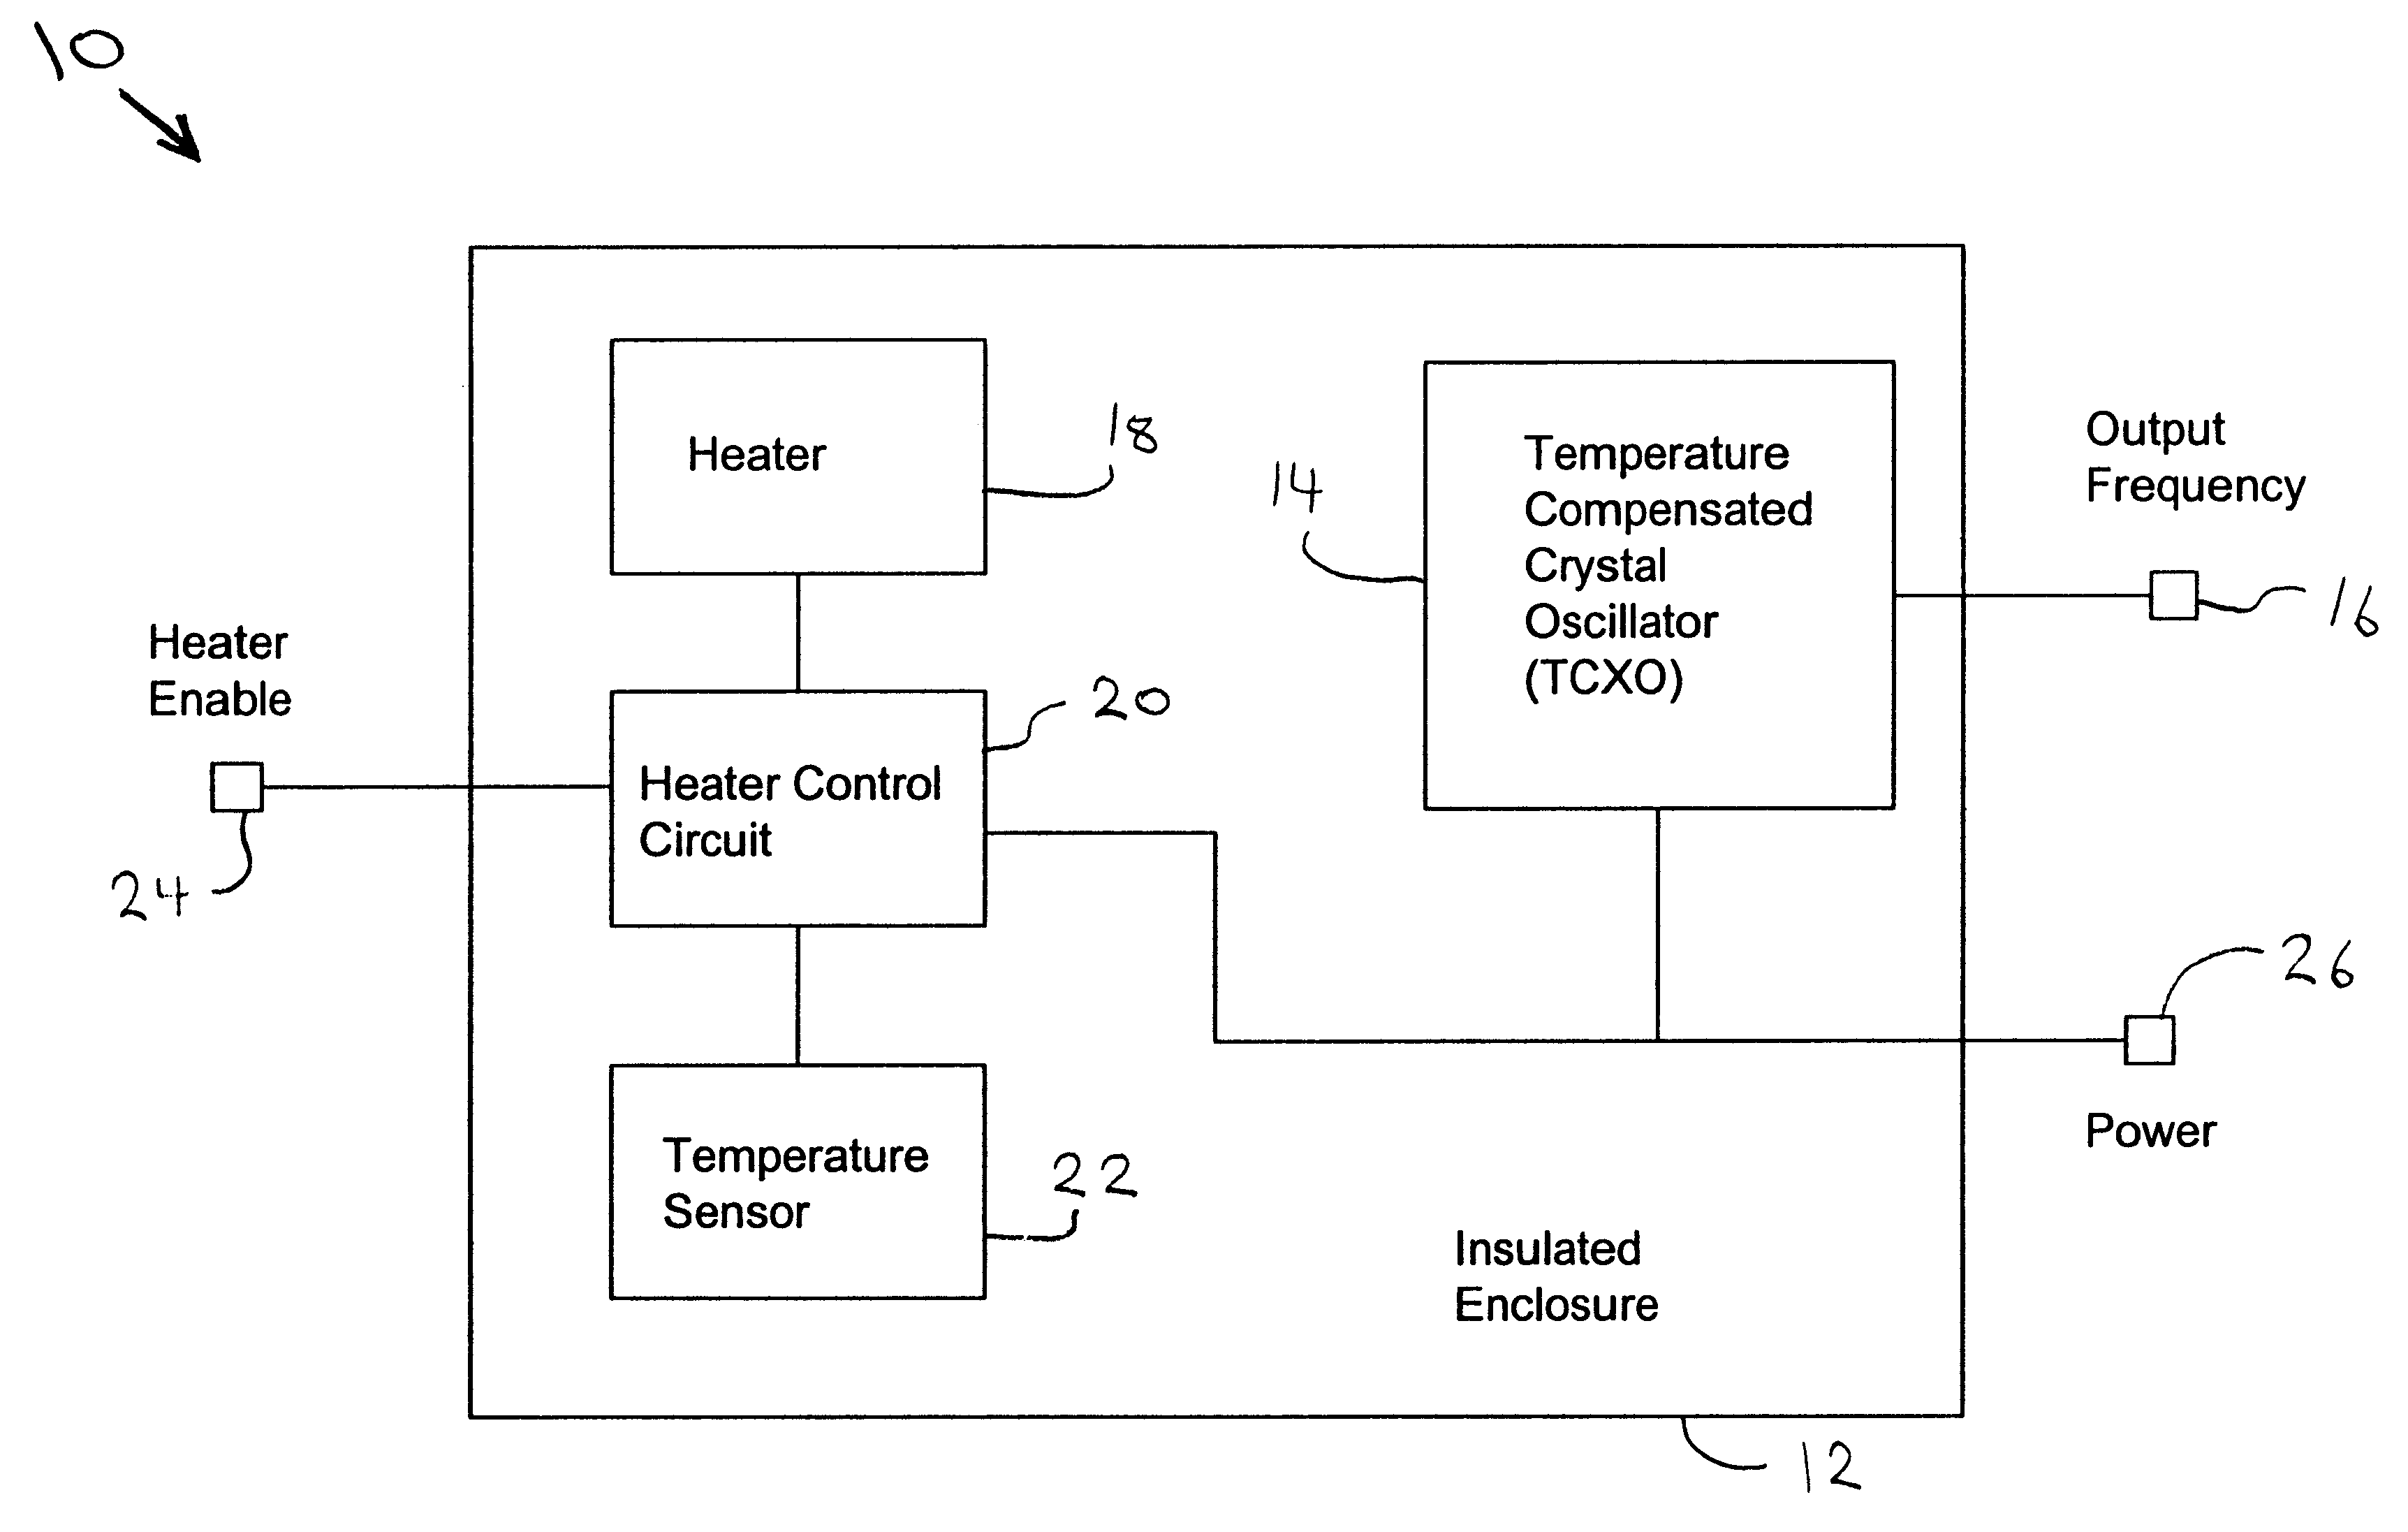 Temperature controlled compensated oscillator